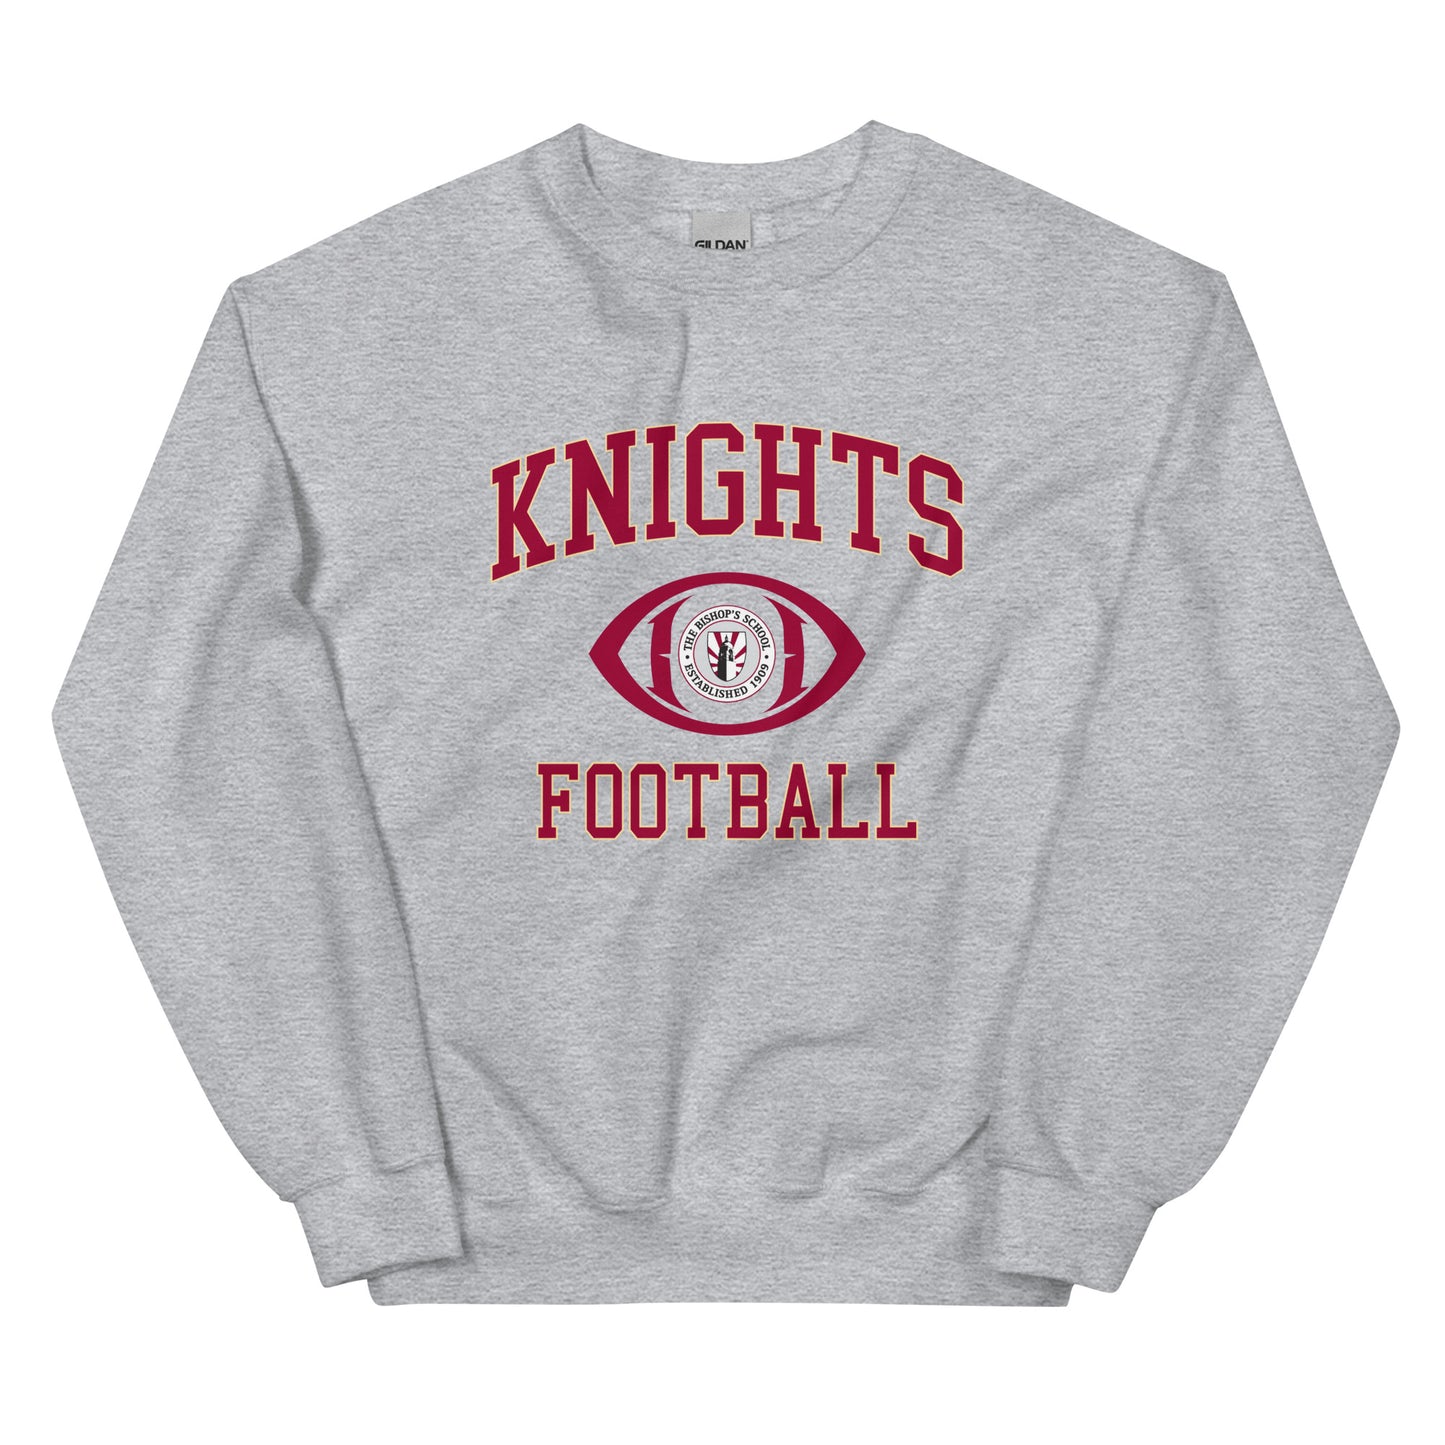 Knights Football Unisex Sweatshirt